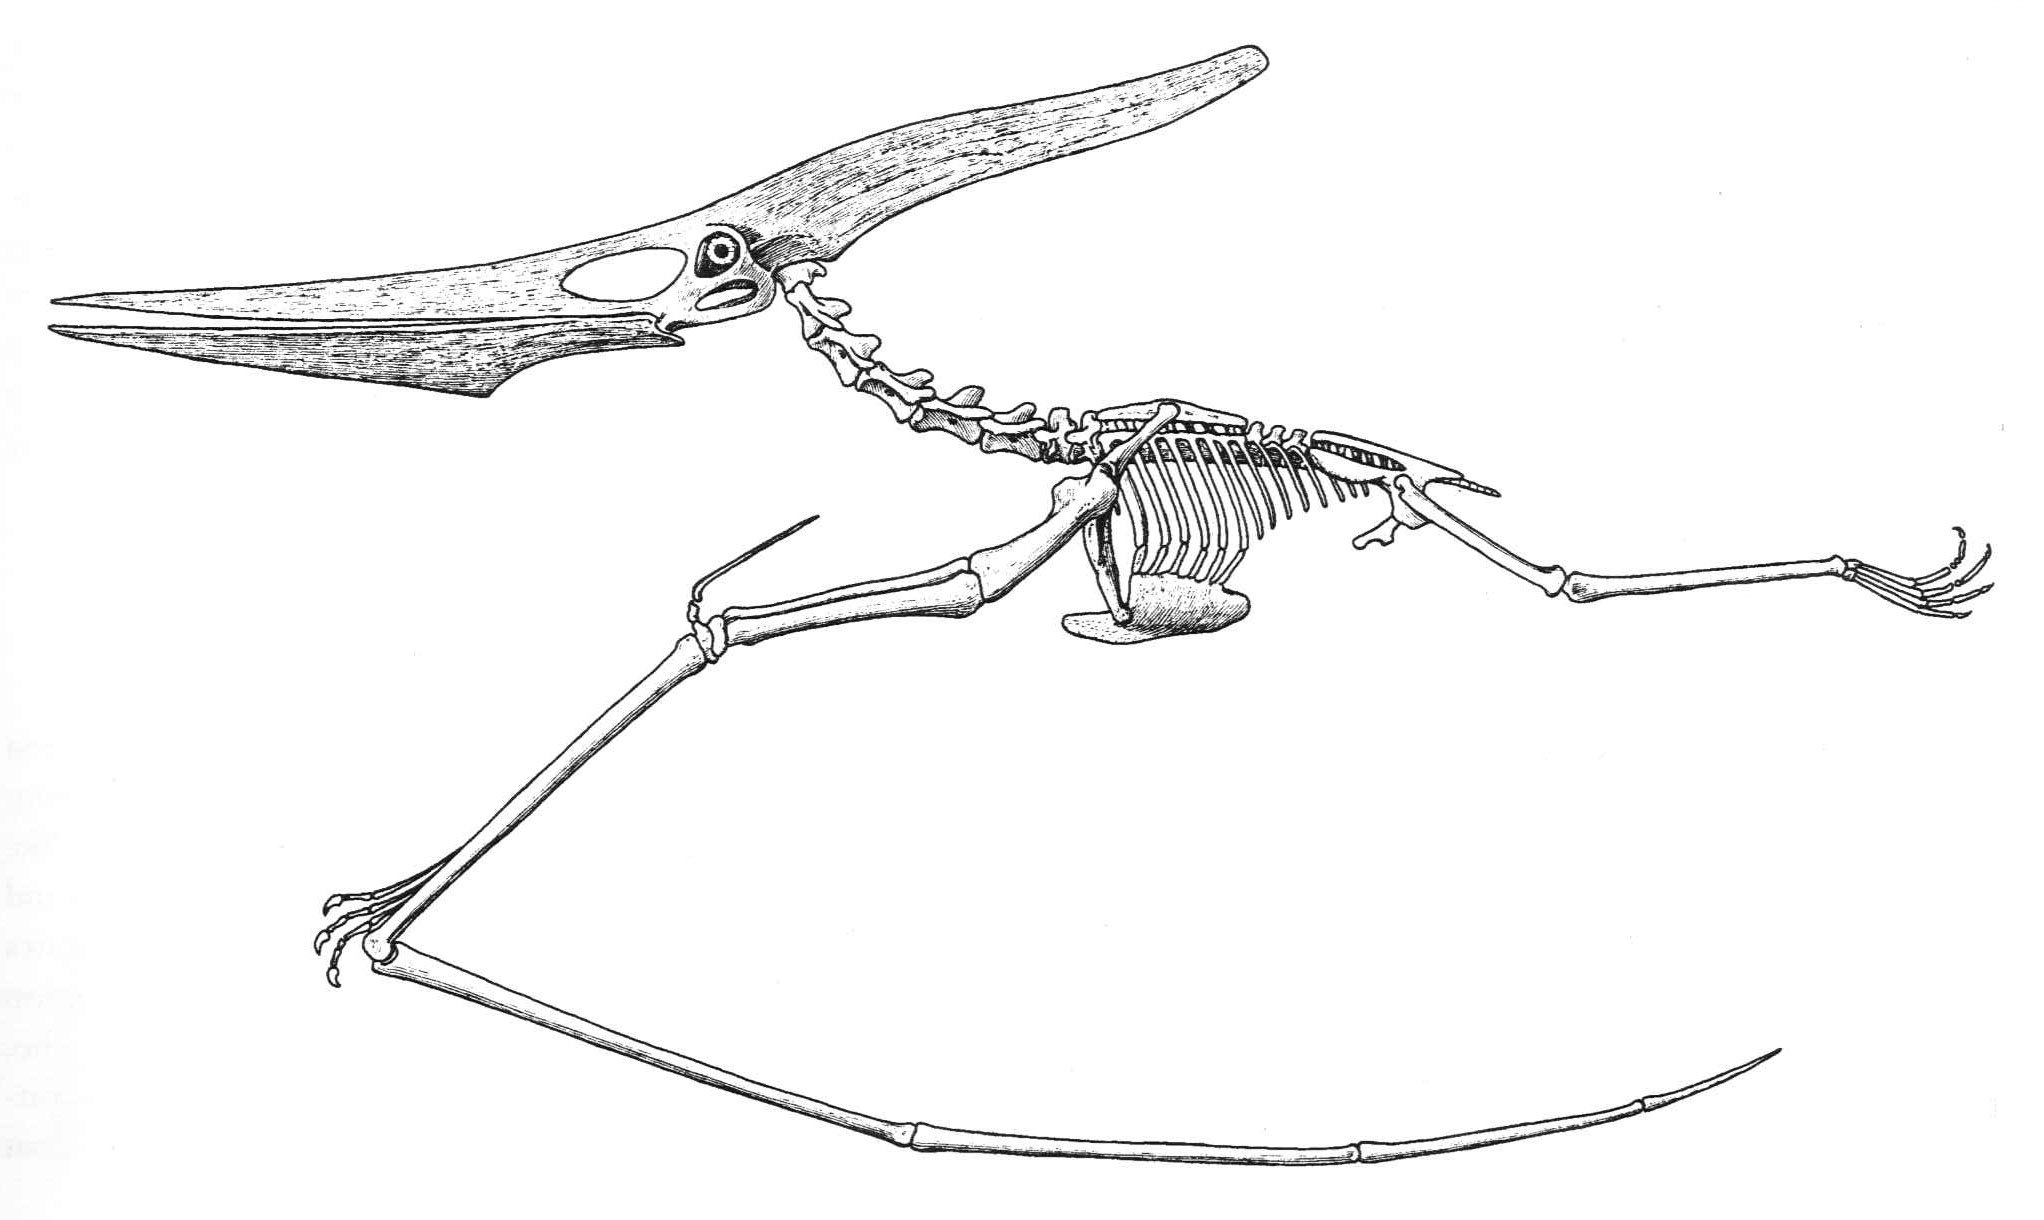 Задние конечности питона. Птеранодон и Кетцалькоатль. Кетцалькоатль Птерозавр скелет. Строение Птерозавра. Строение птеранодона.